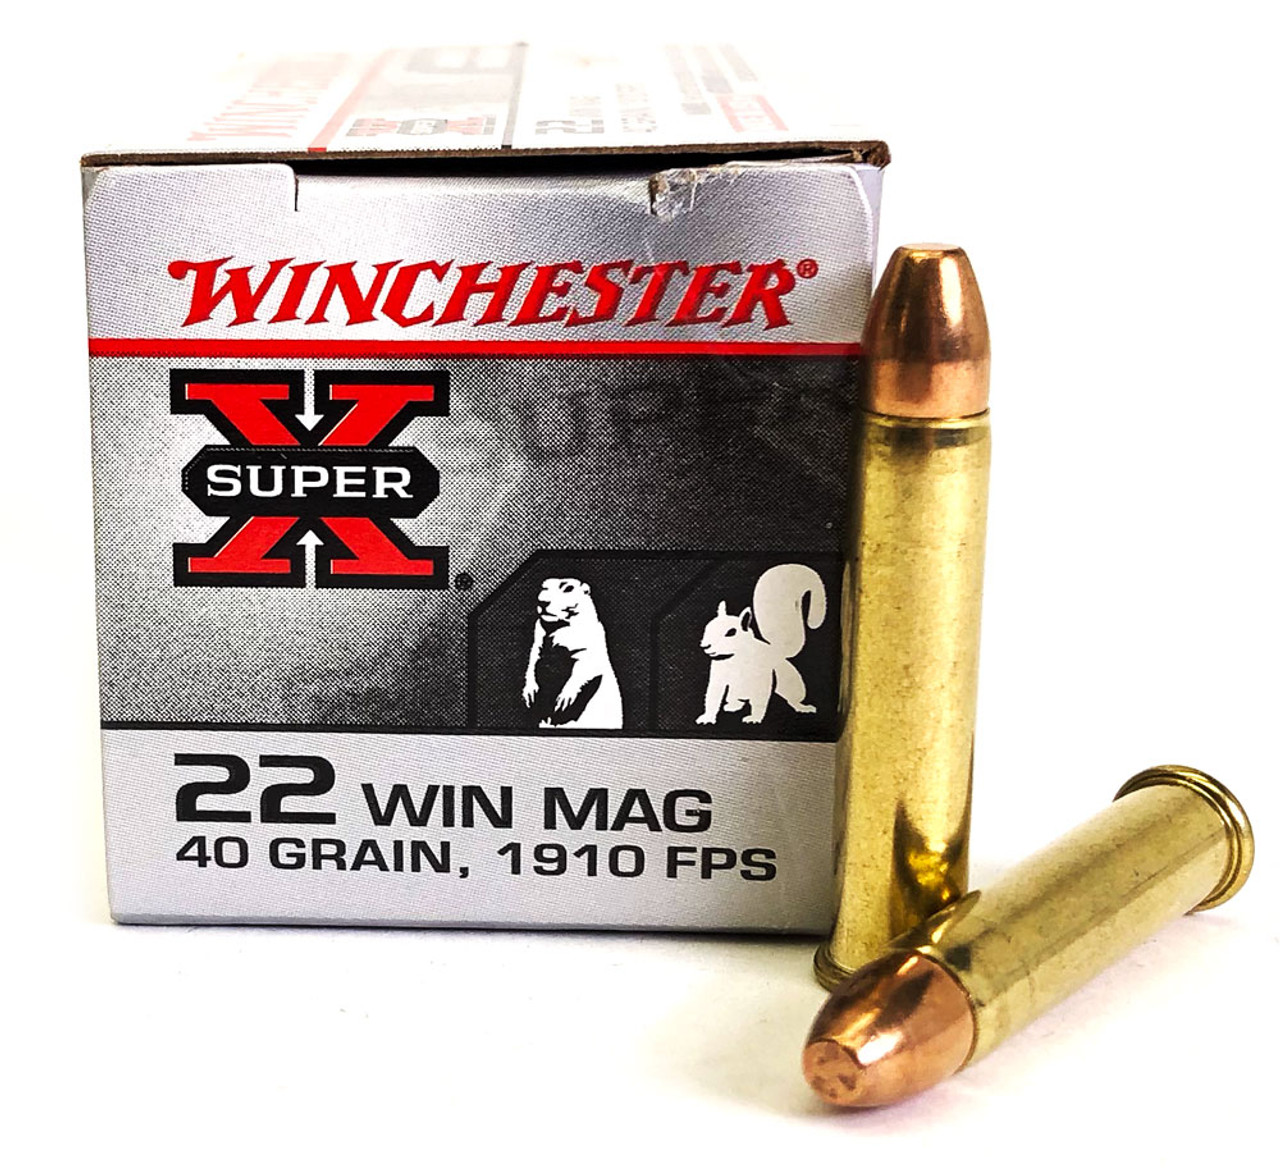 22 Magnum Winchester Super-X 40 Grain Varmint FMJ For Sale In Stock